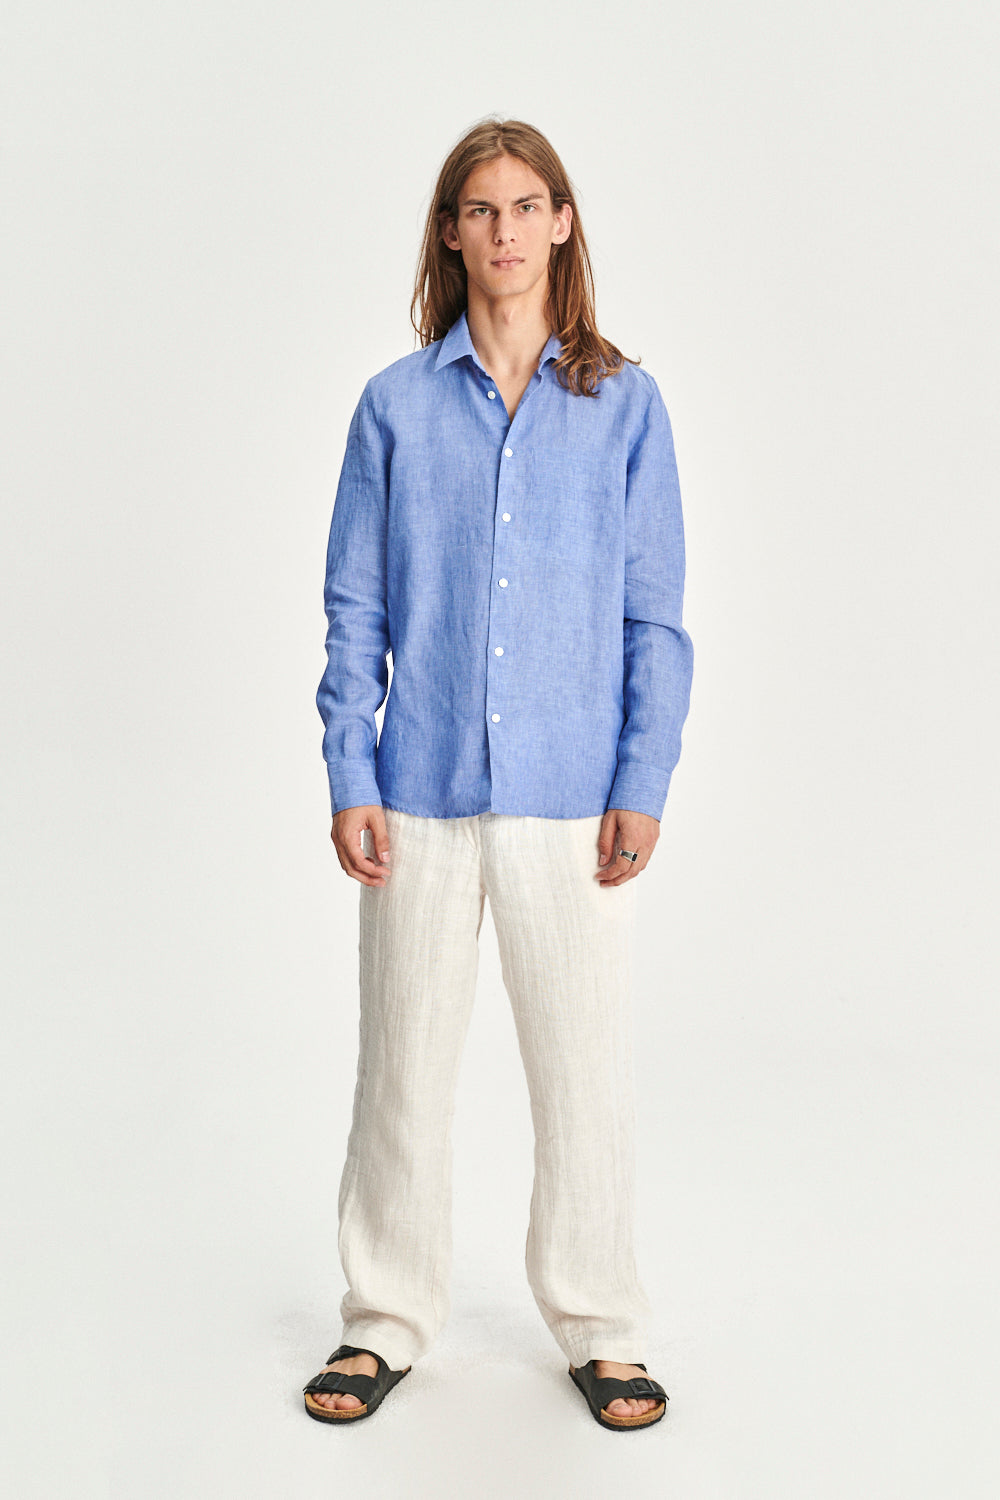 Feel Good Shirt in a Blue Italian Woven Traceable European Linen